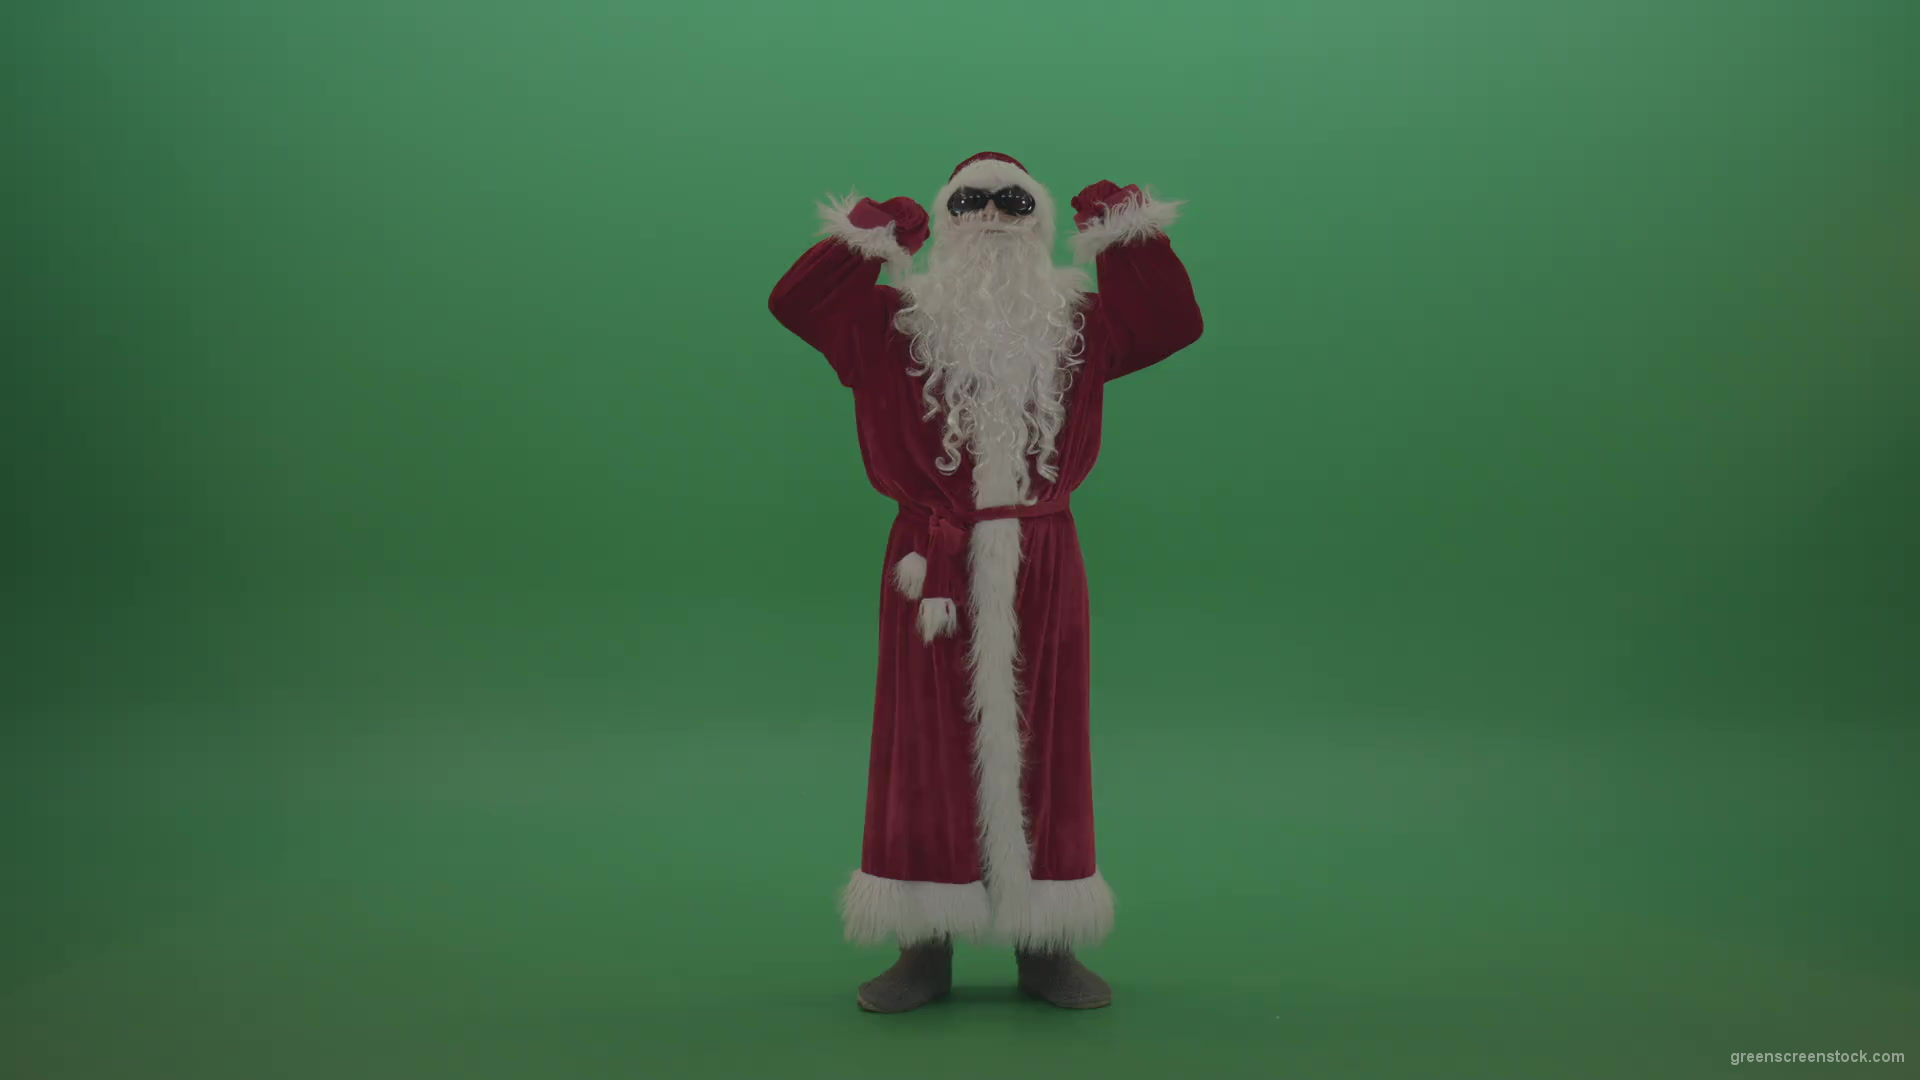 Santa-in-black-glasses-celebrates-his-victory-over-green-screen-background-1920_001 Green Screen Stock